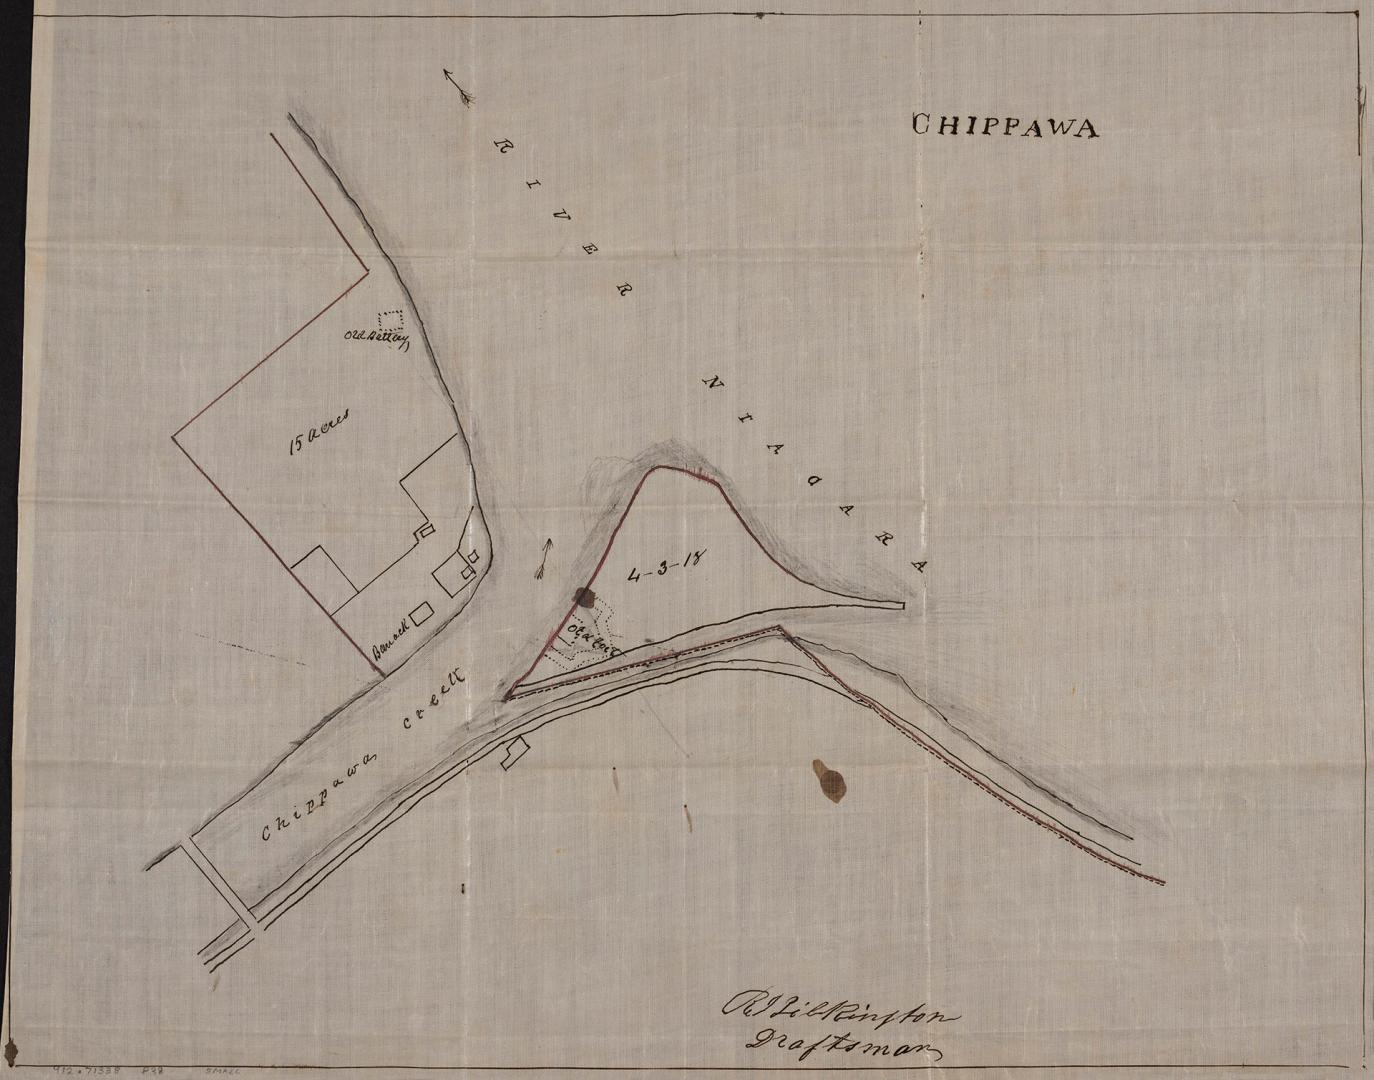 Chippawa (circa 1790)